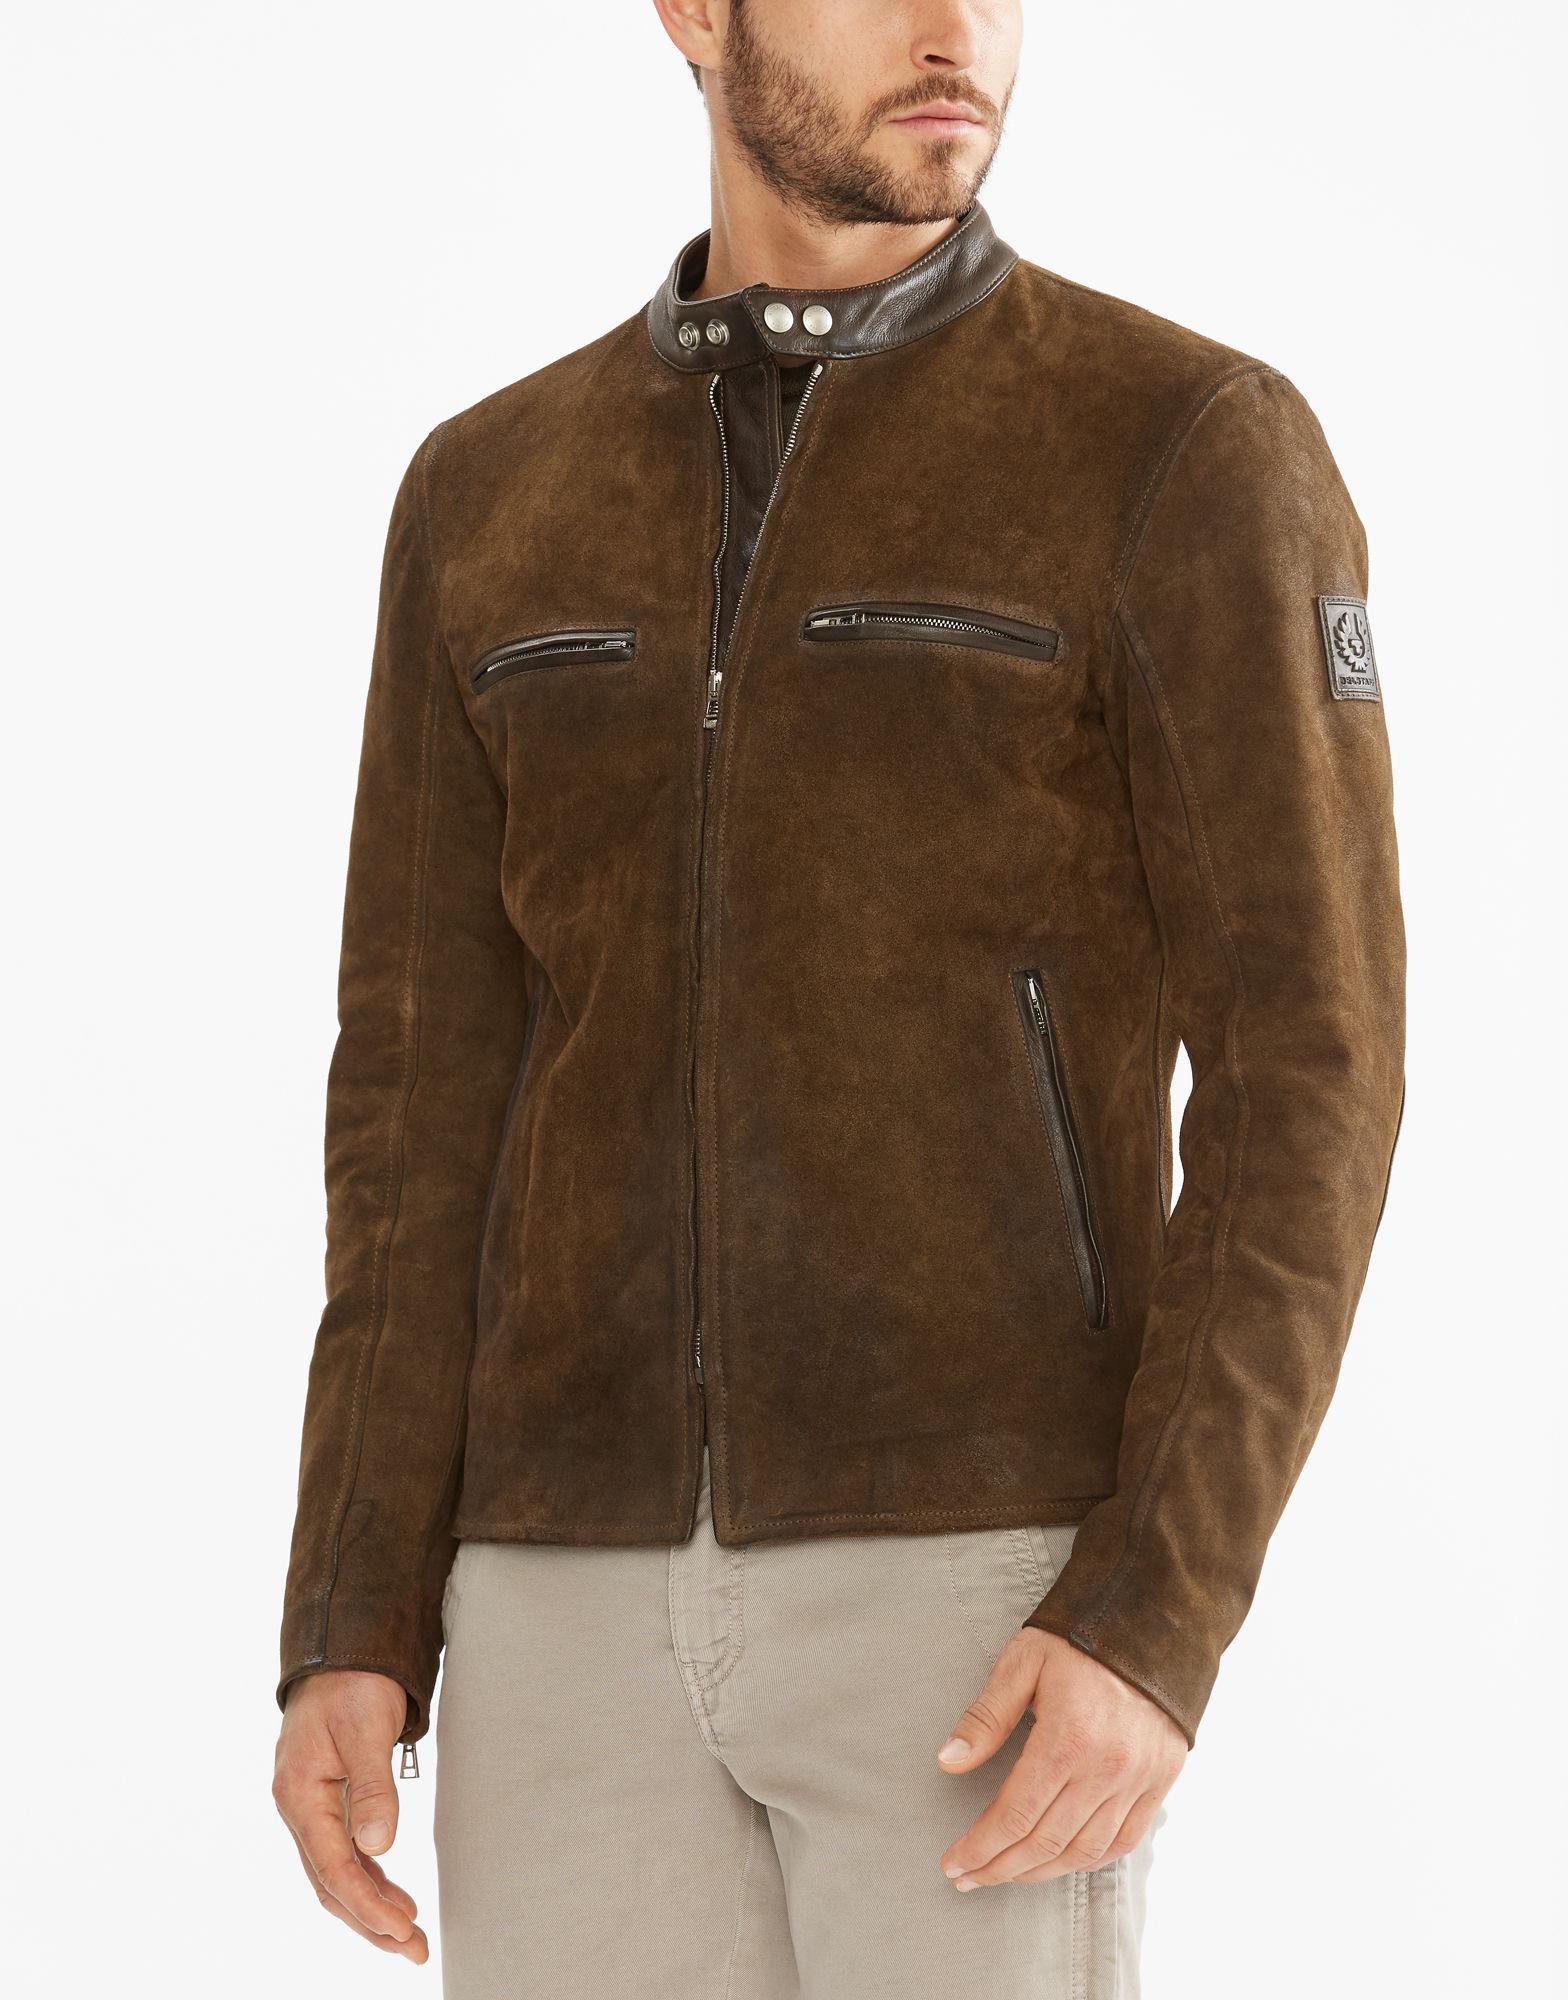 Belstaff Suede Landrake Blouson Jacket in Pale Brown (Brown) for Men - Lyst